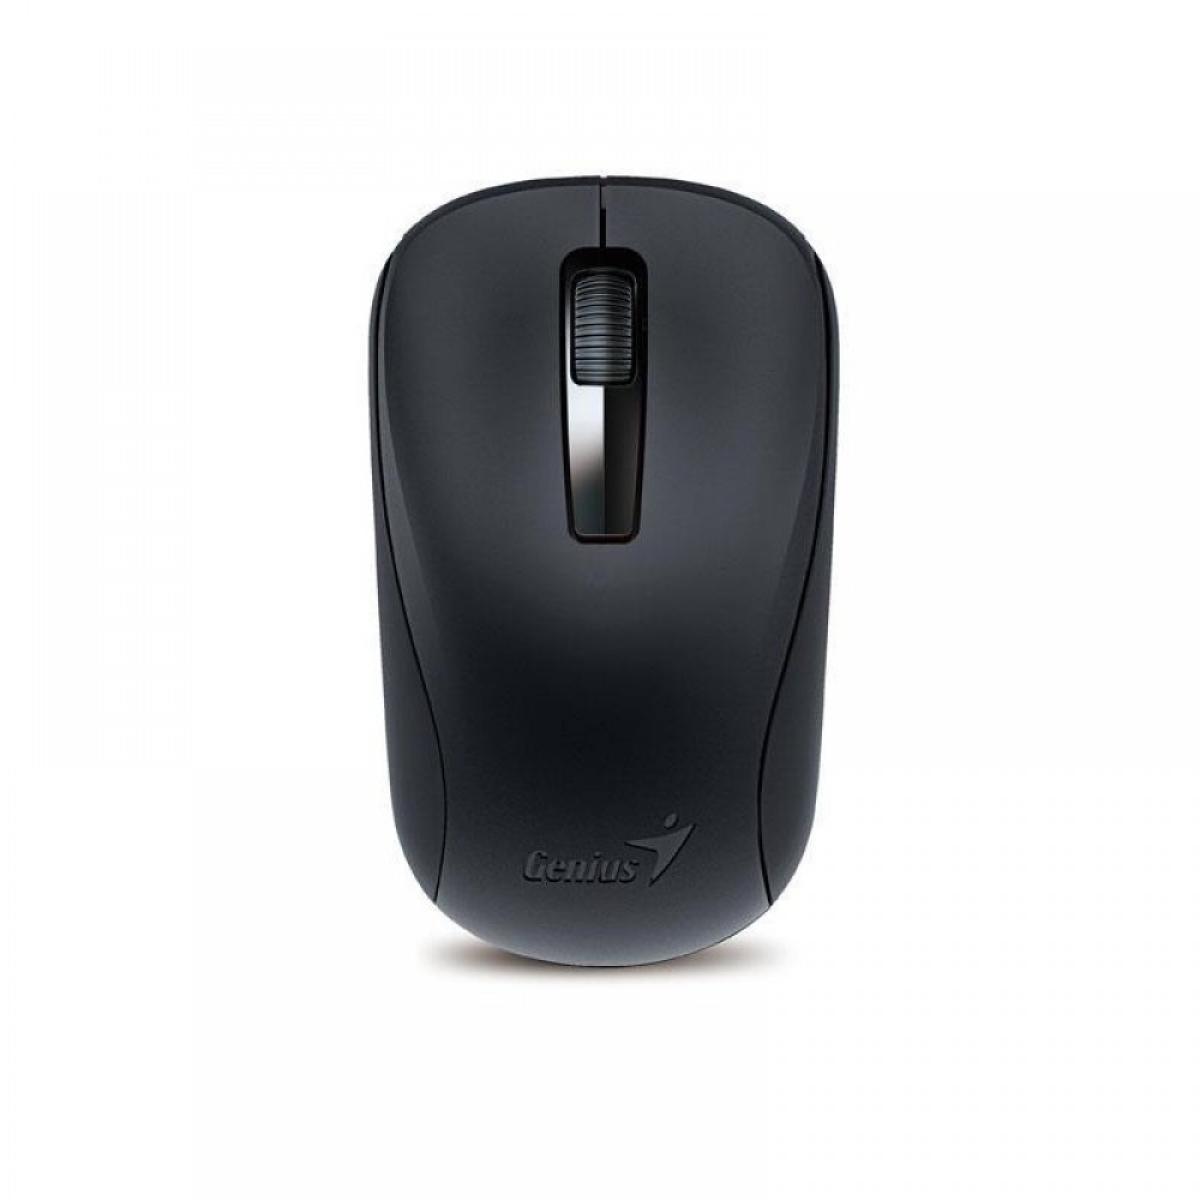 Genius NX-7005 Wireless Mouse 1200 DPI USB BLACK G5 HANGER